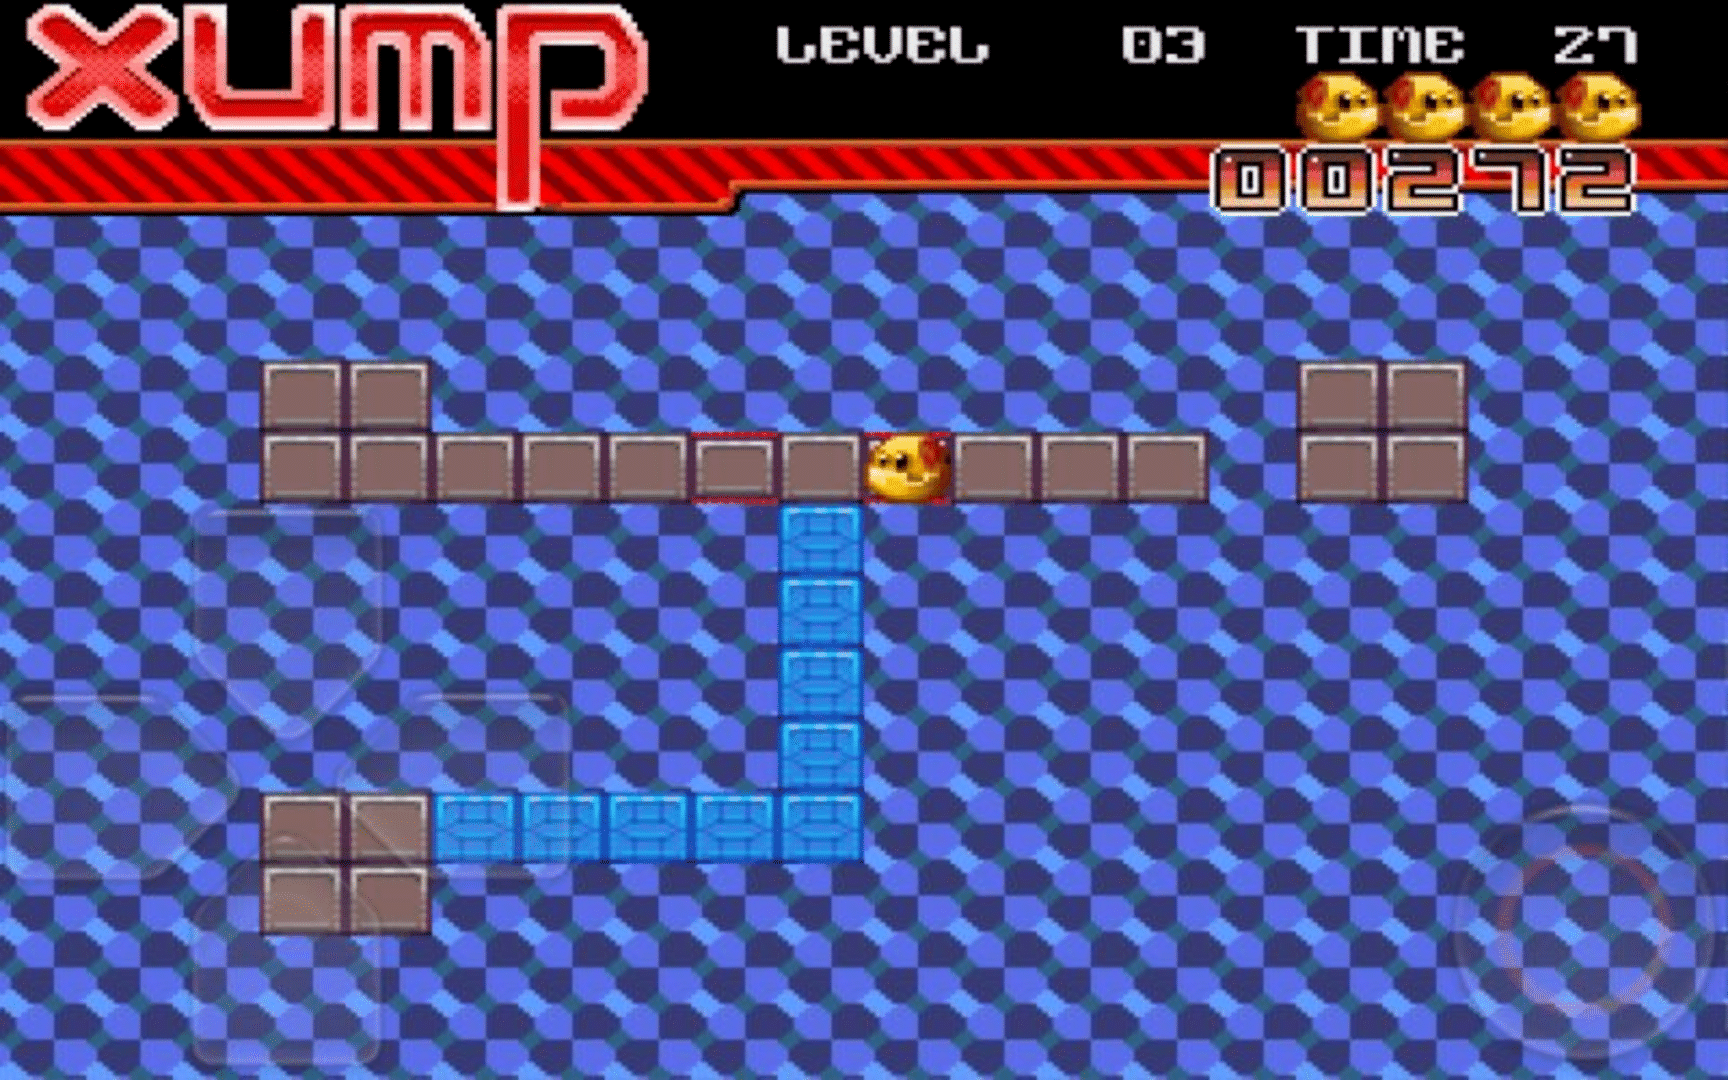 Xump: The Final Run screenshot